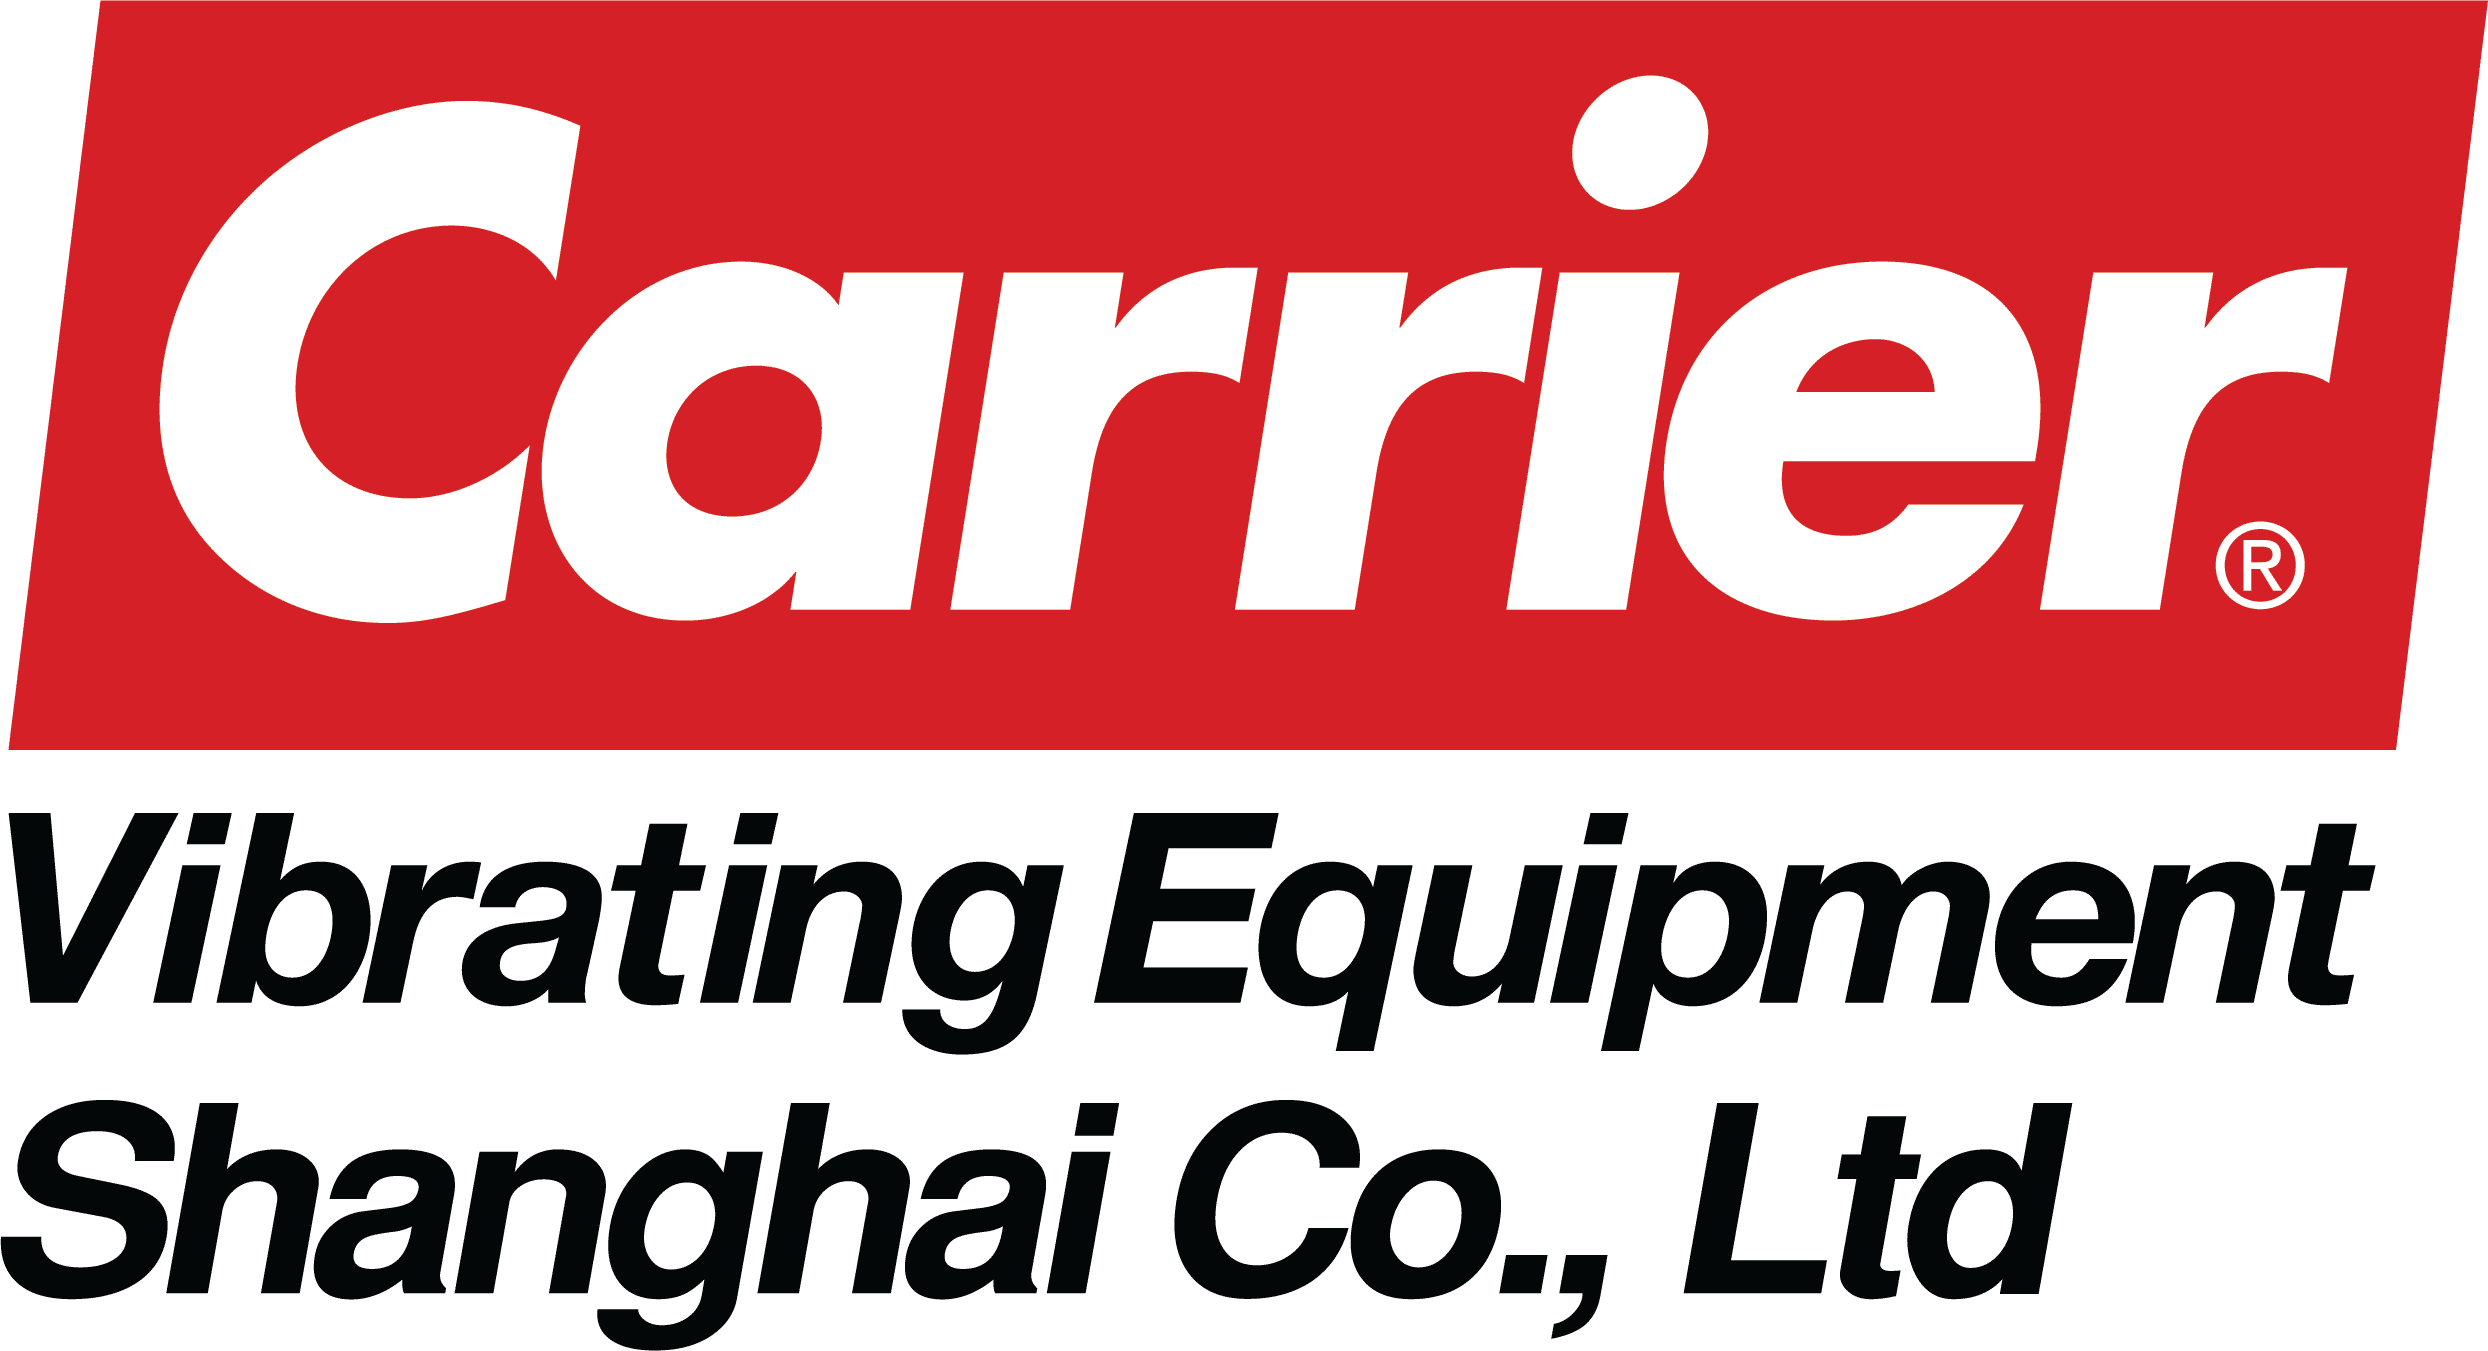 Contact - Carrier Shanghai